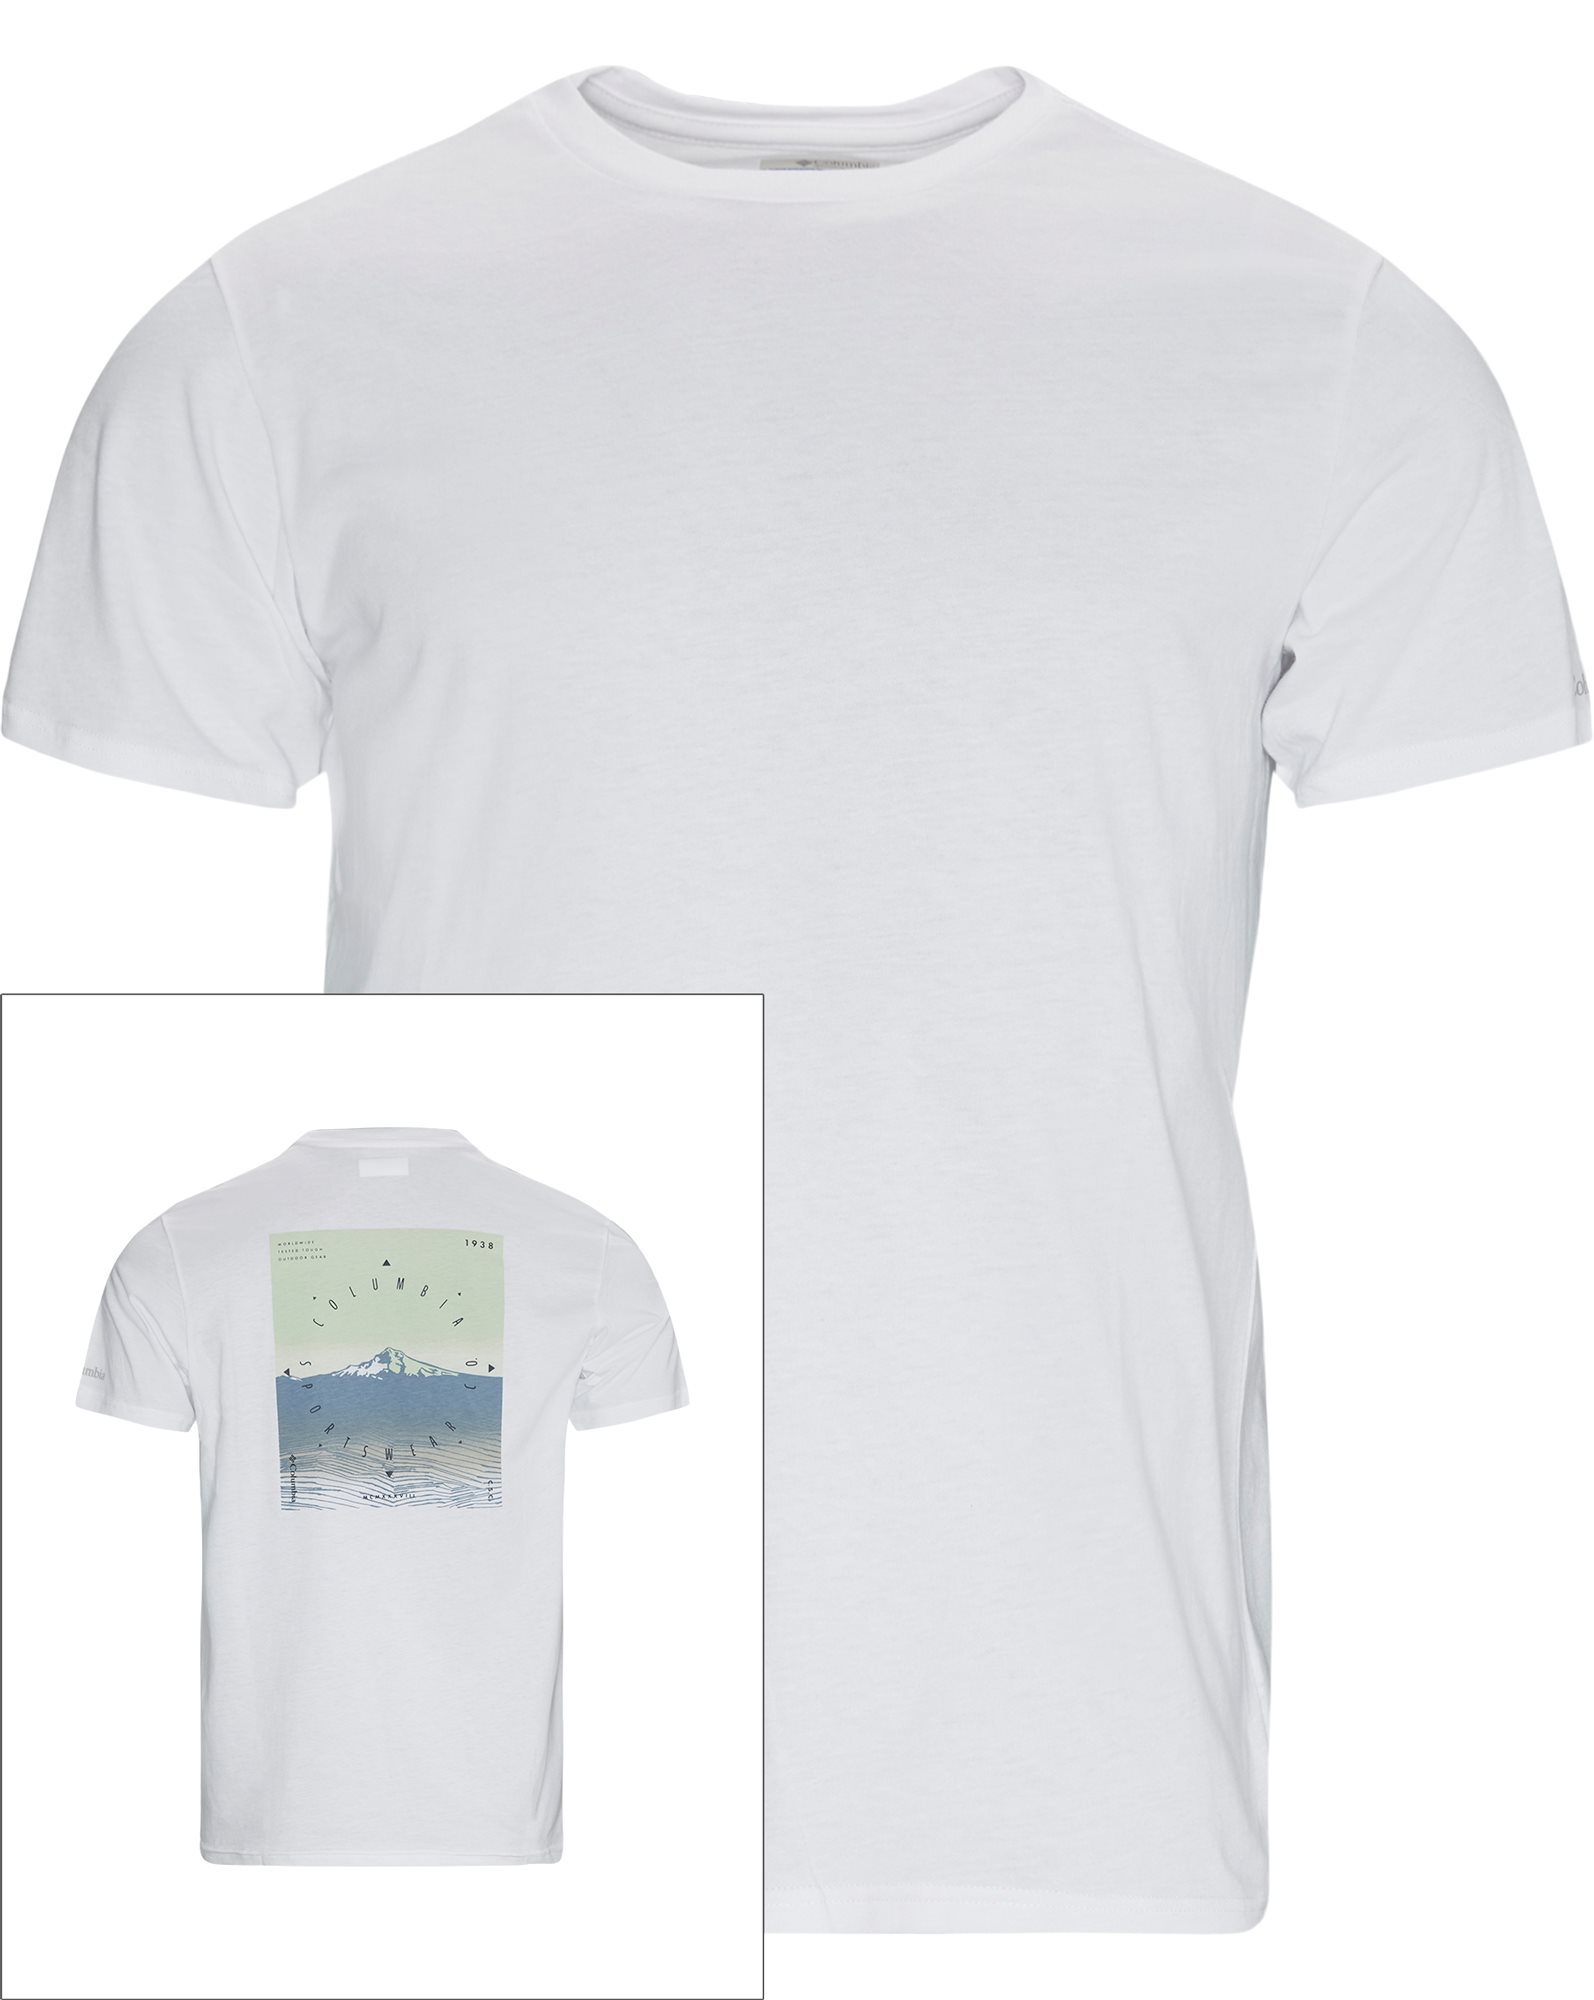 High Dune Tee - T-shirts - Regular fit - Vit